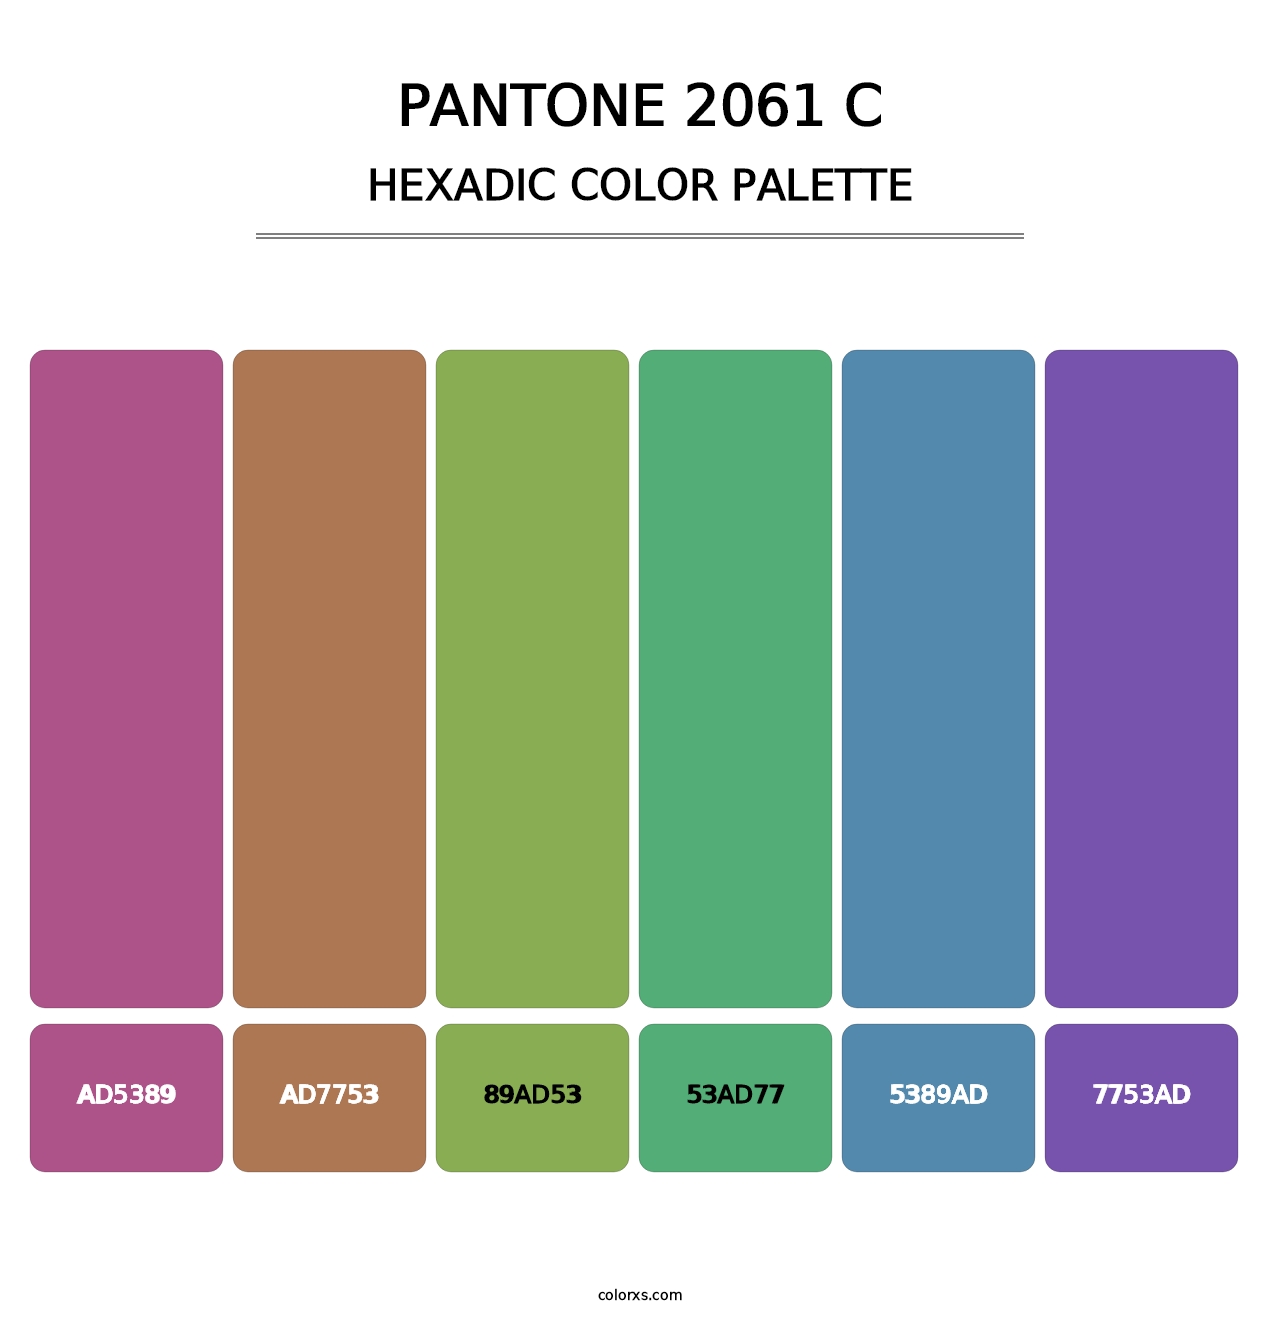 PANTONE 2061 C - Hexadic Color Palette